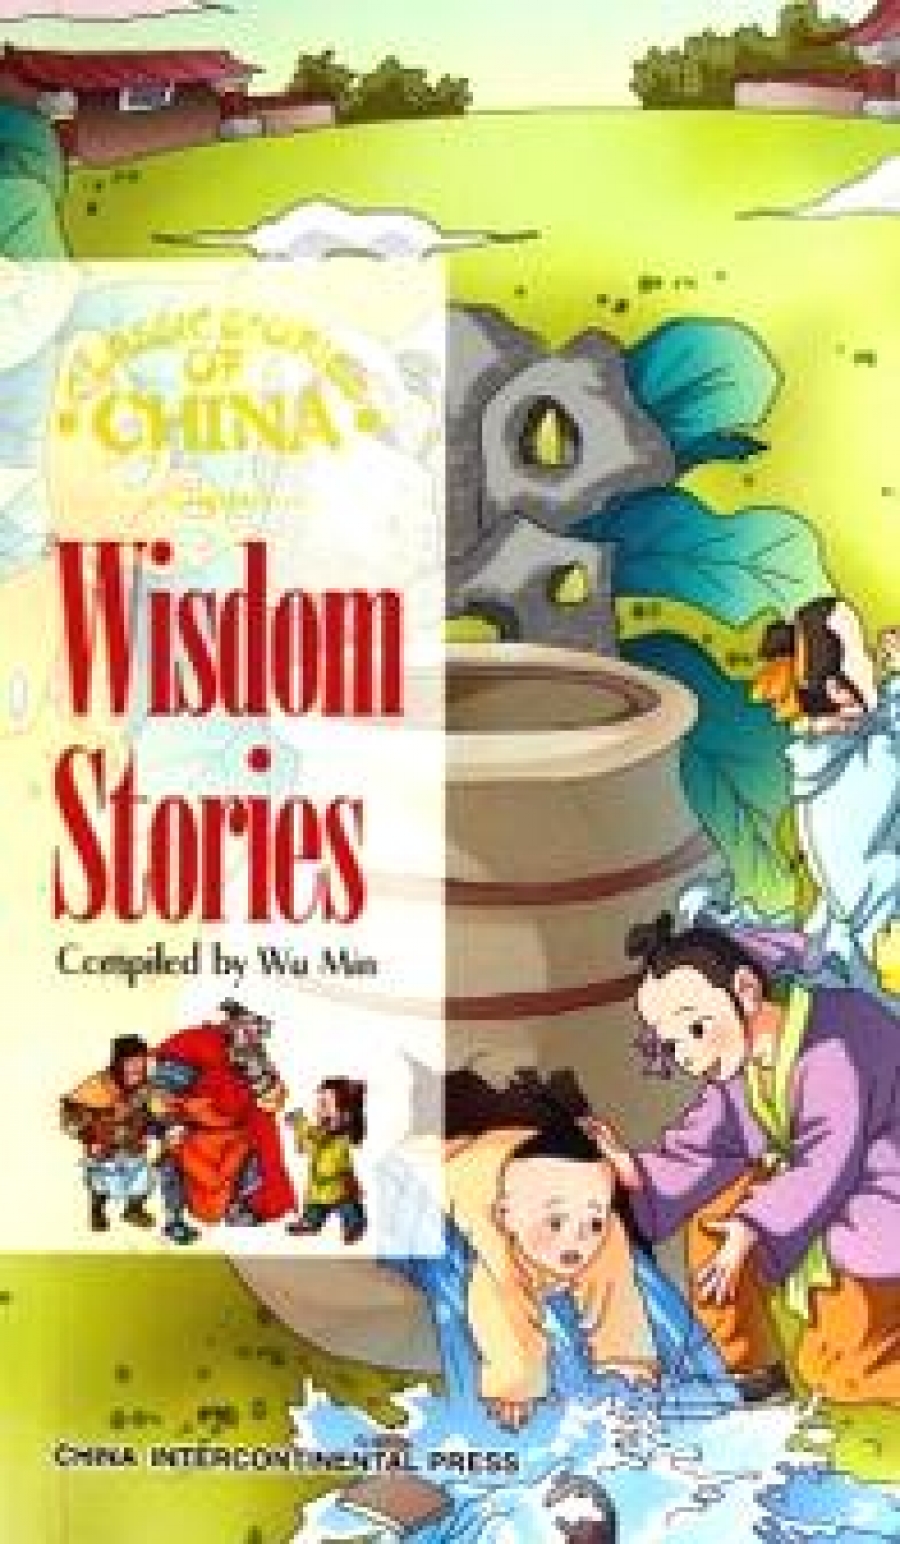 Min Wu Wisdom stories 